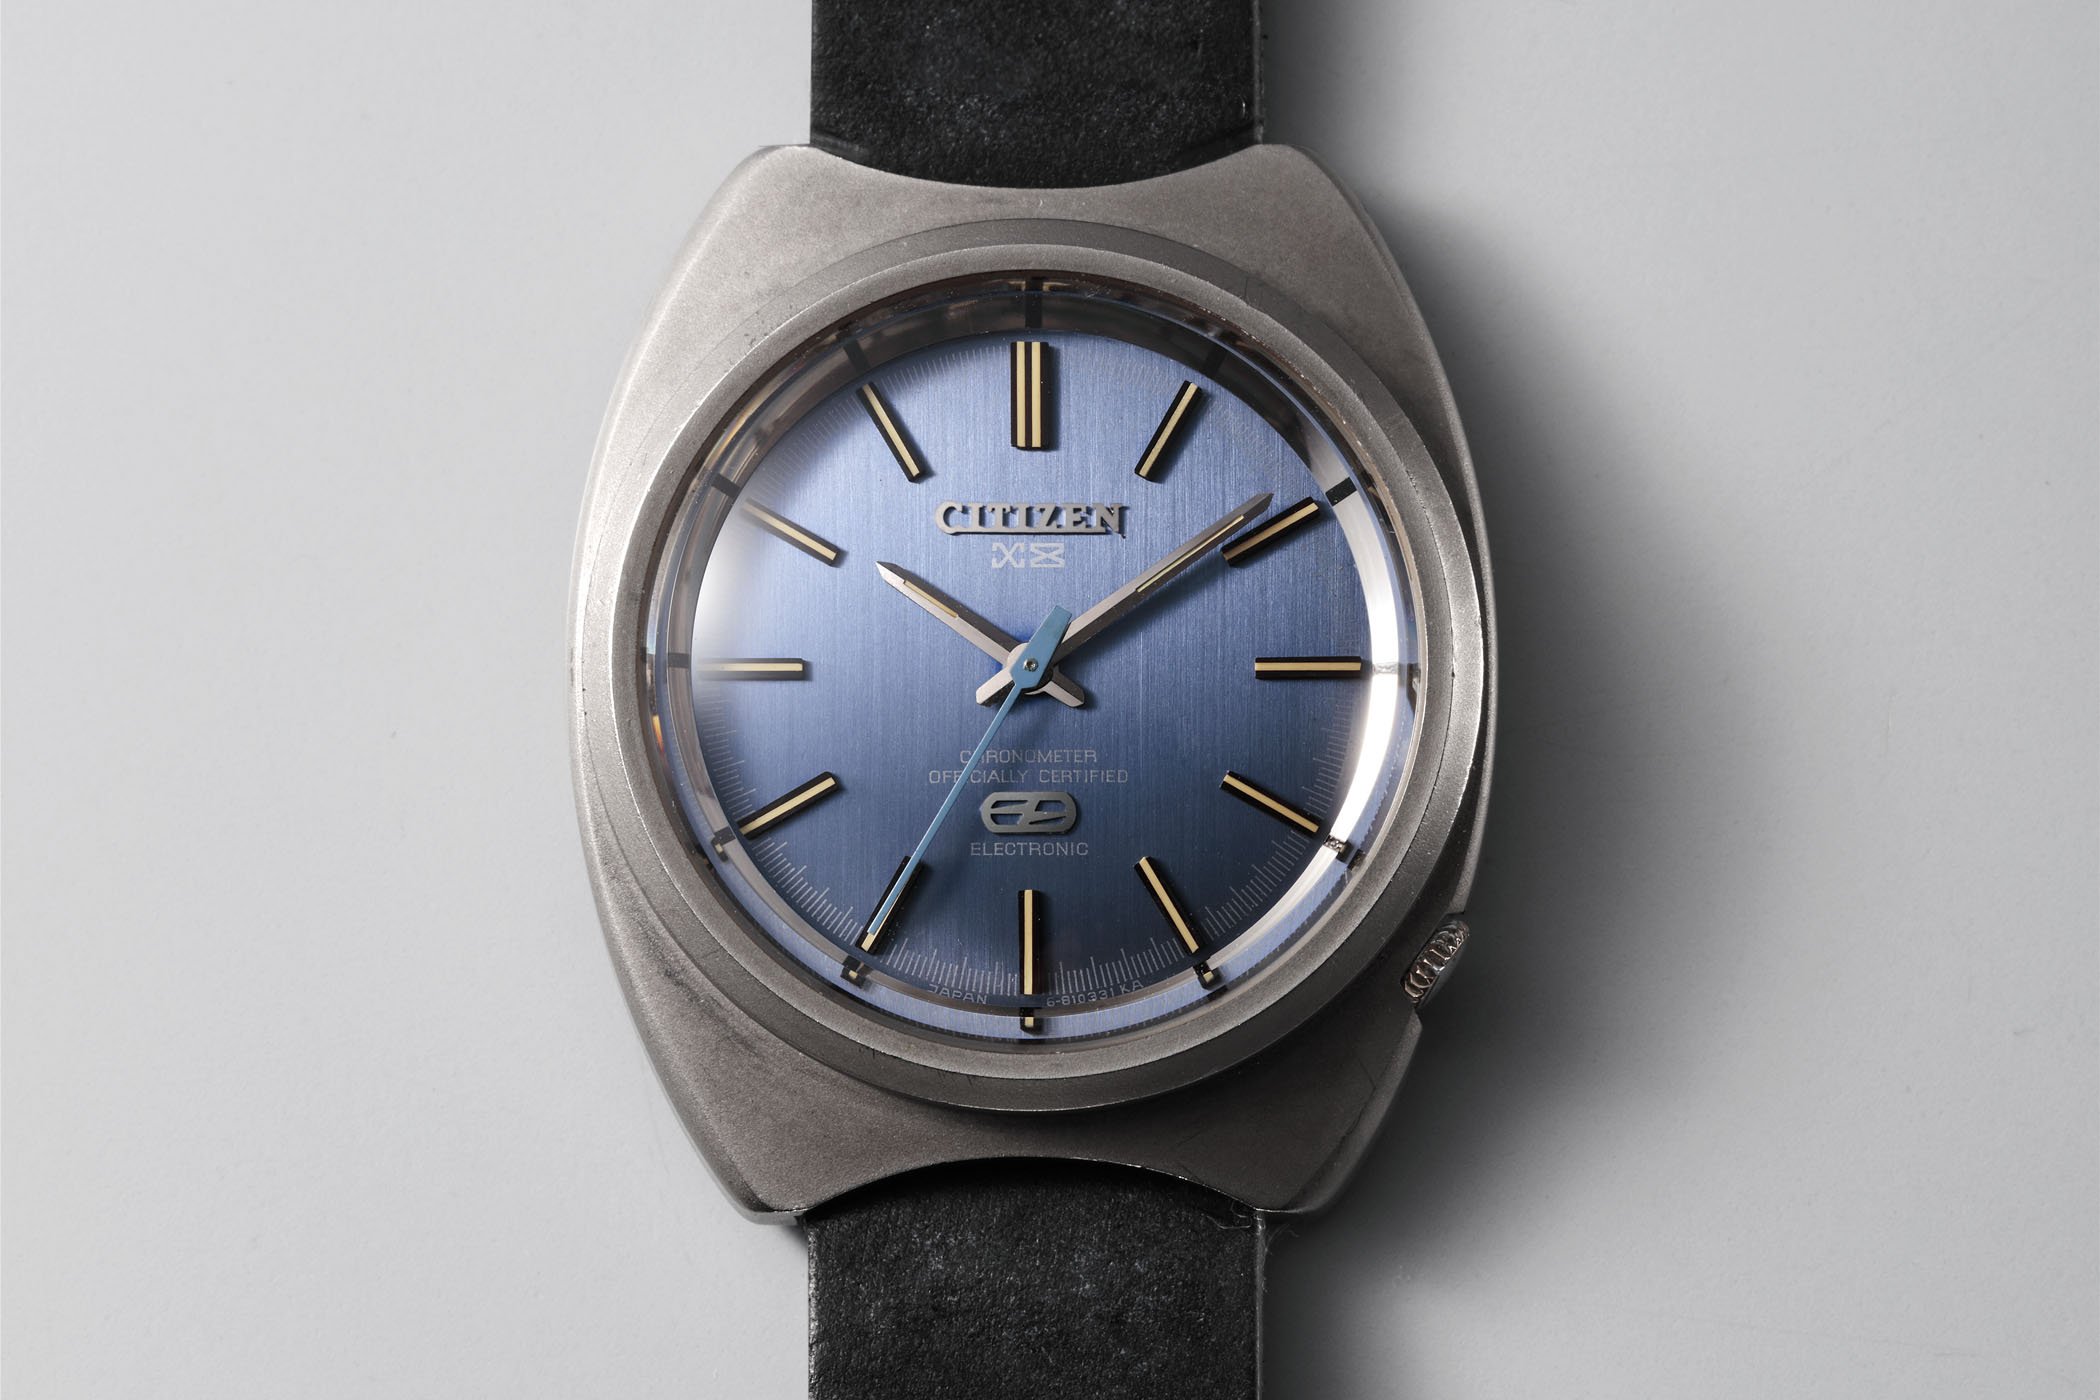 1970 Citizen X-8 Chronometer - first titanium watch